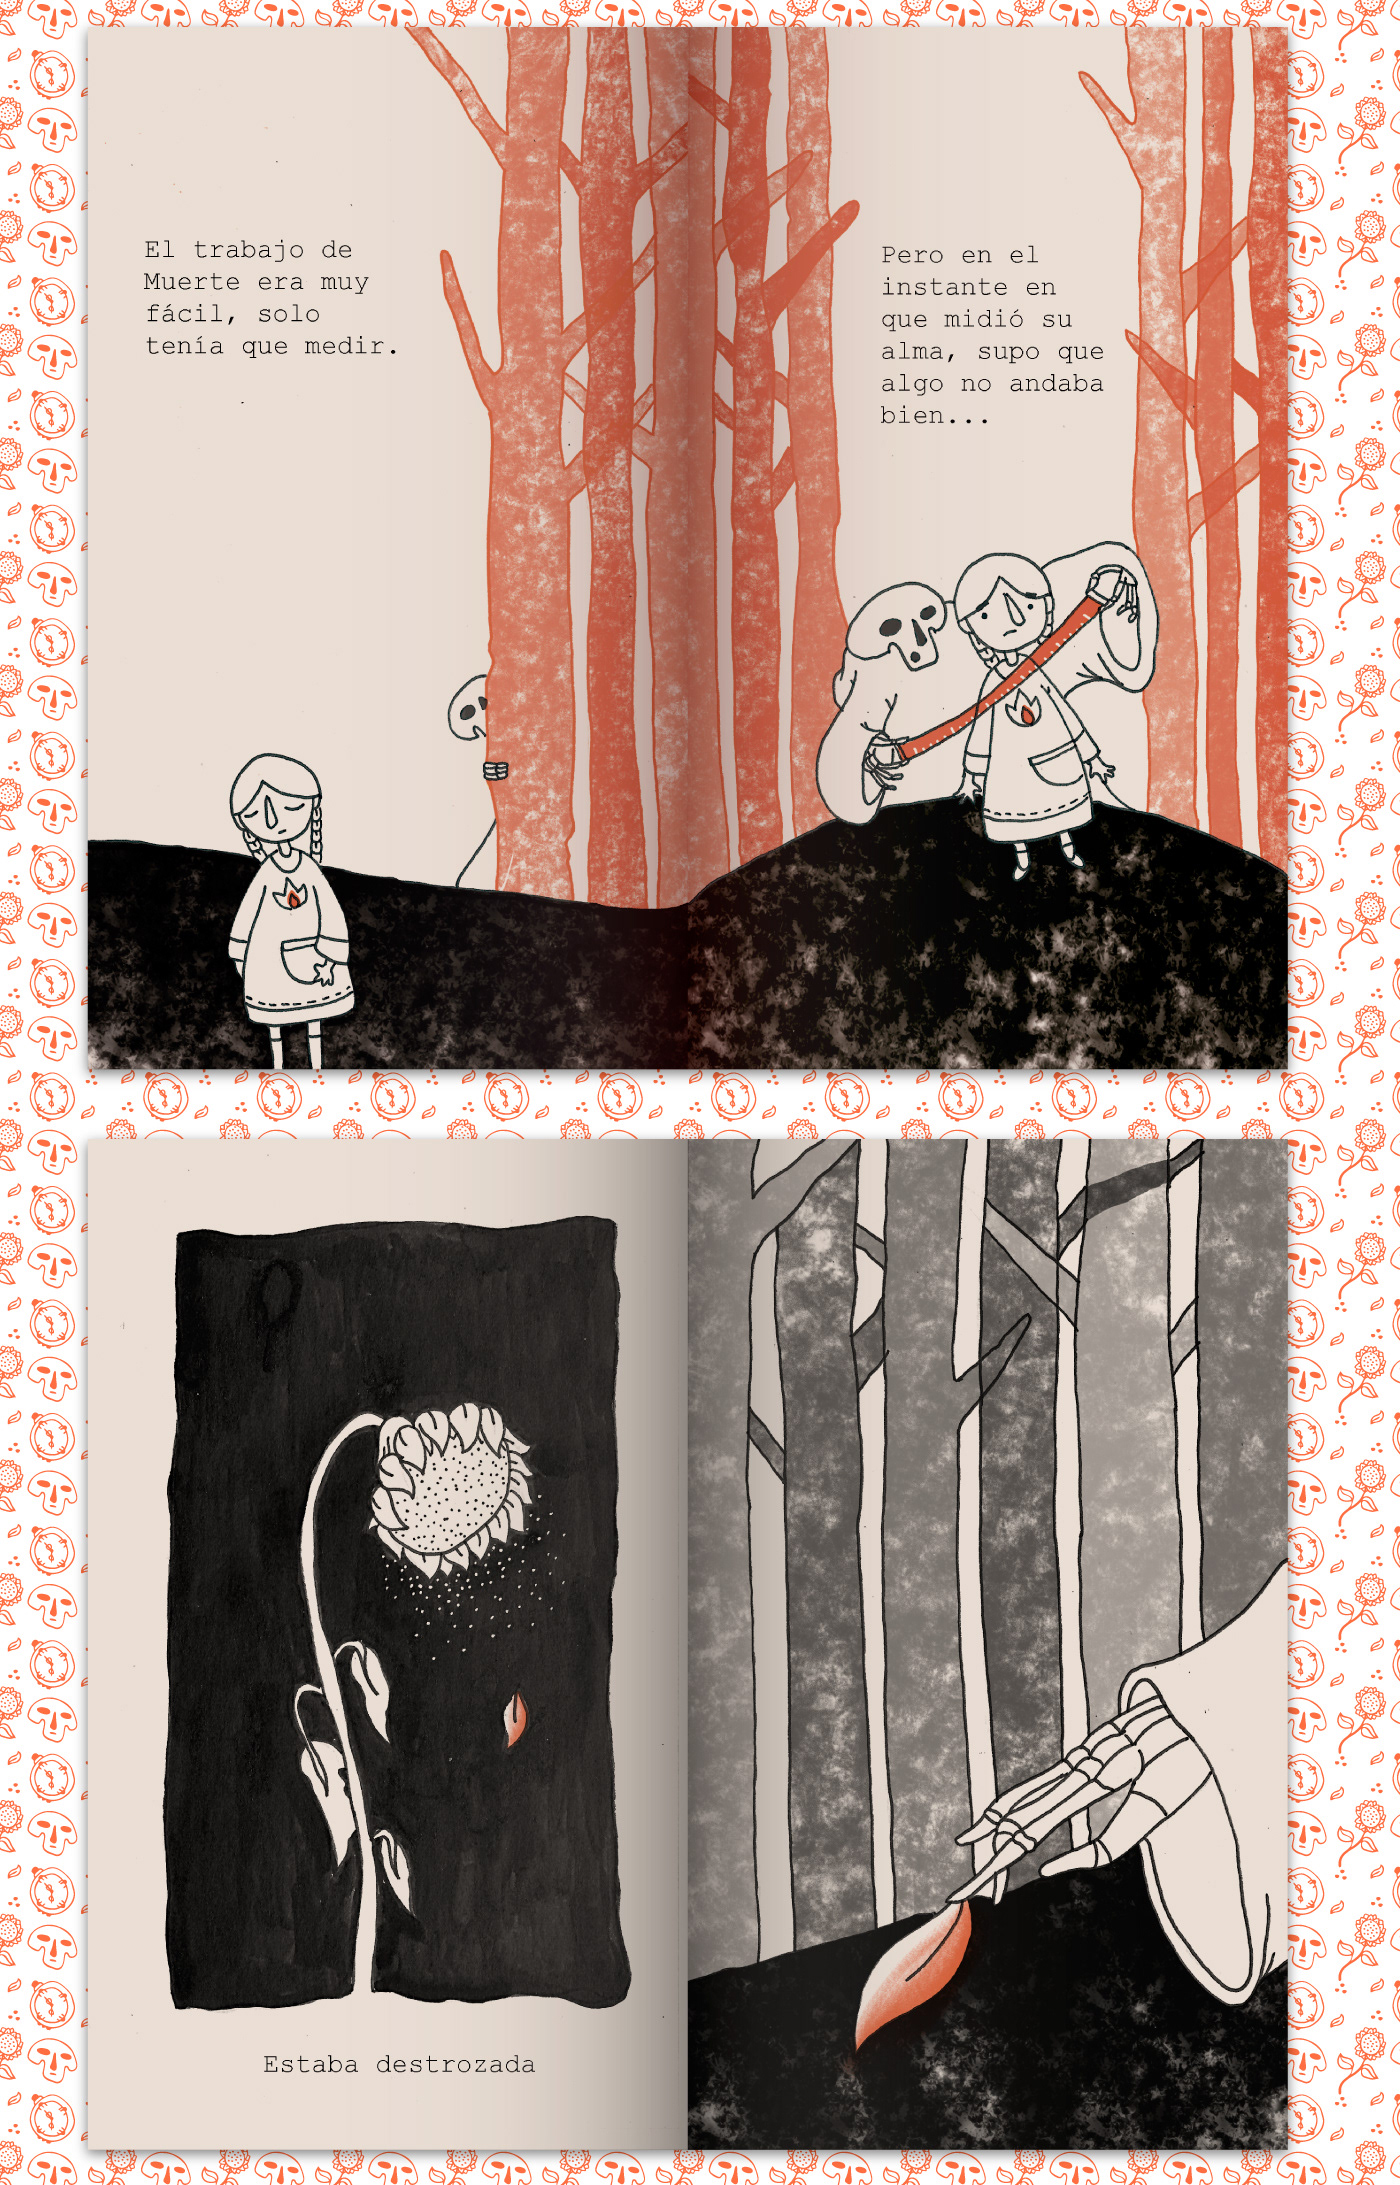 Riso death fanzine short story children illustration sunflower pattern Muerte cuento duo tone